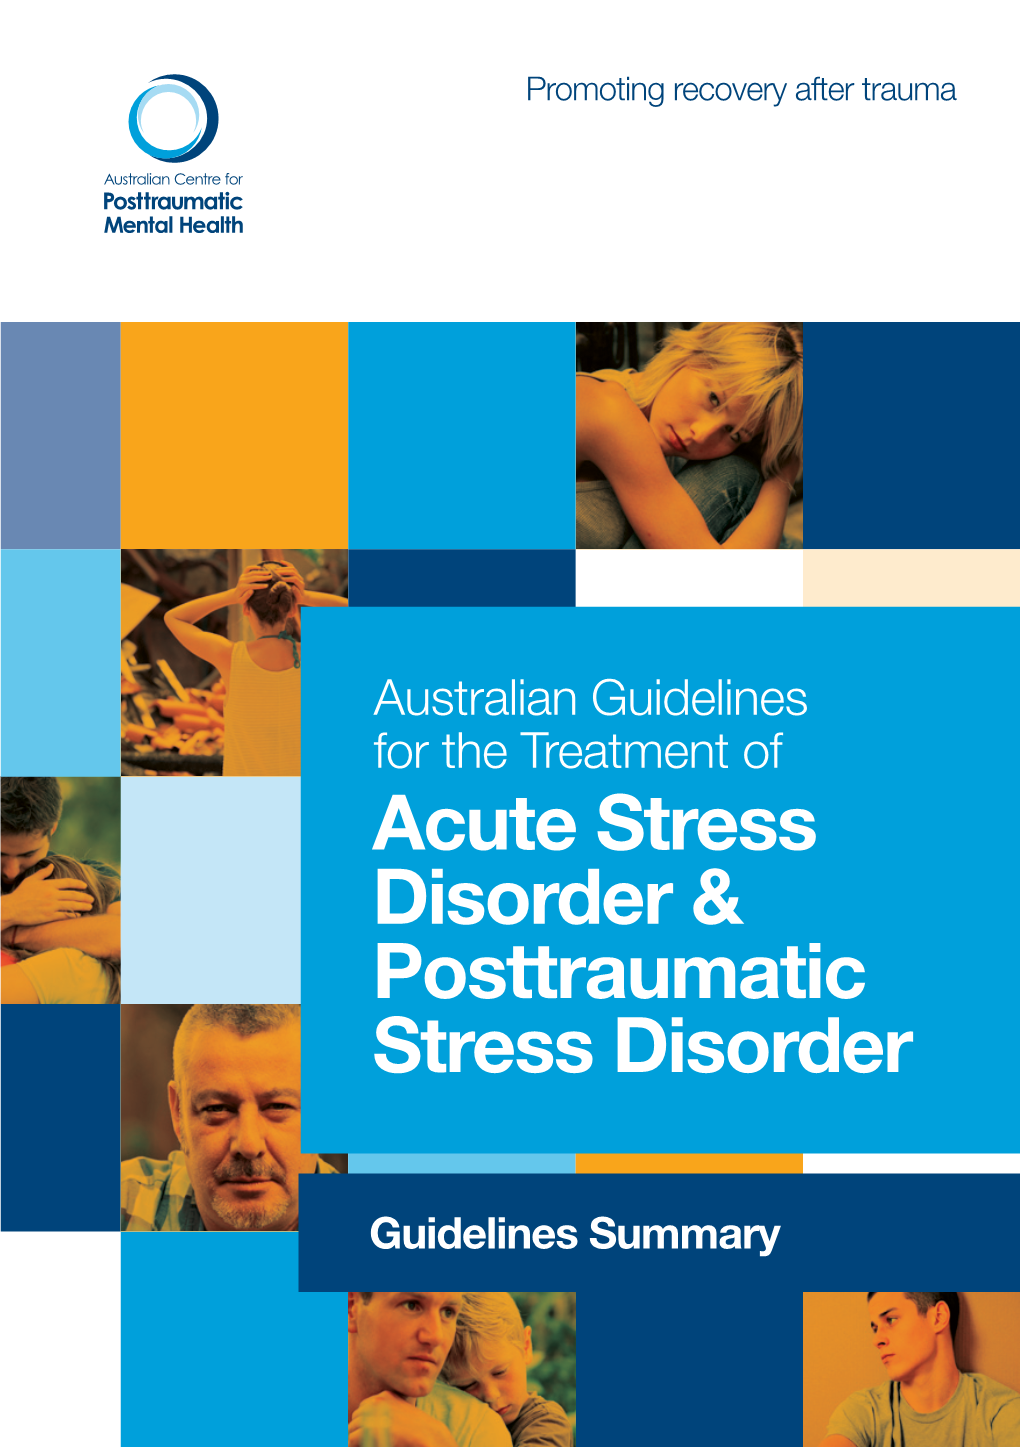 Acute Stress Disorder & Posttraumatic Stress Disorder